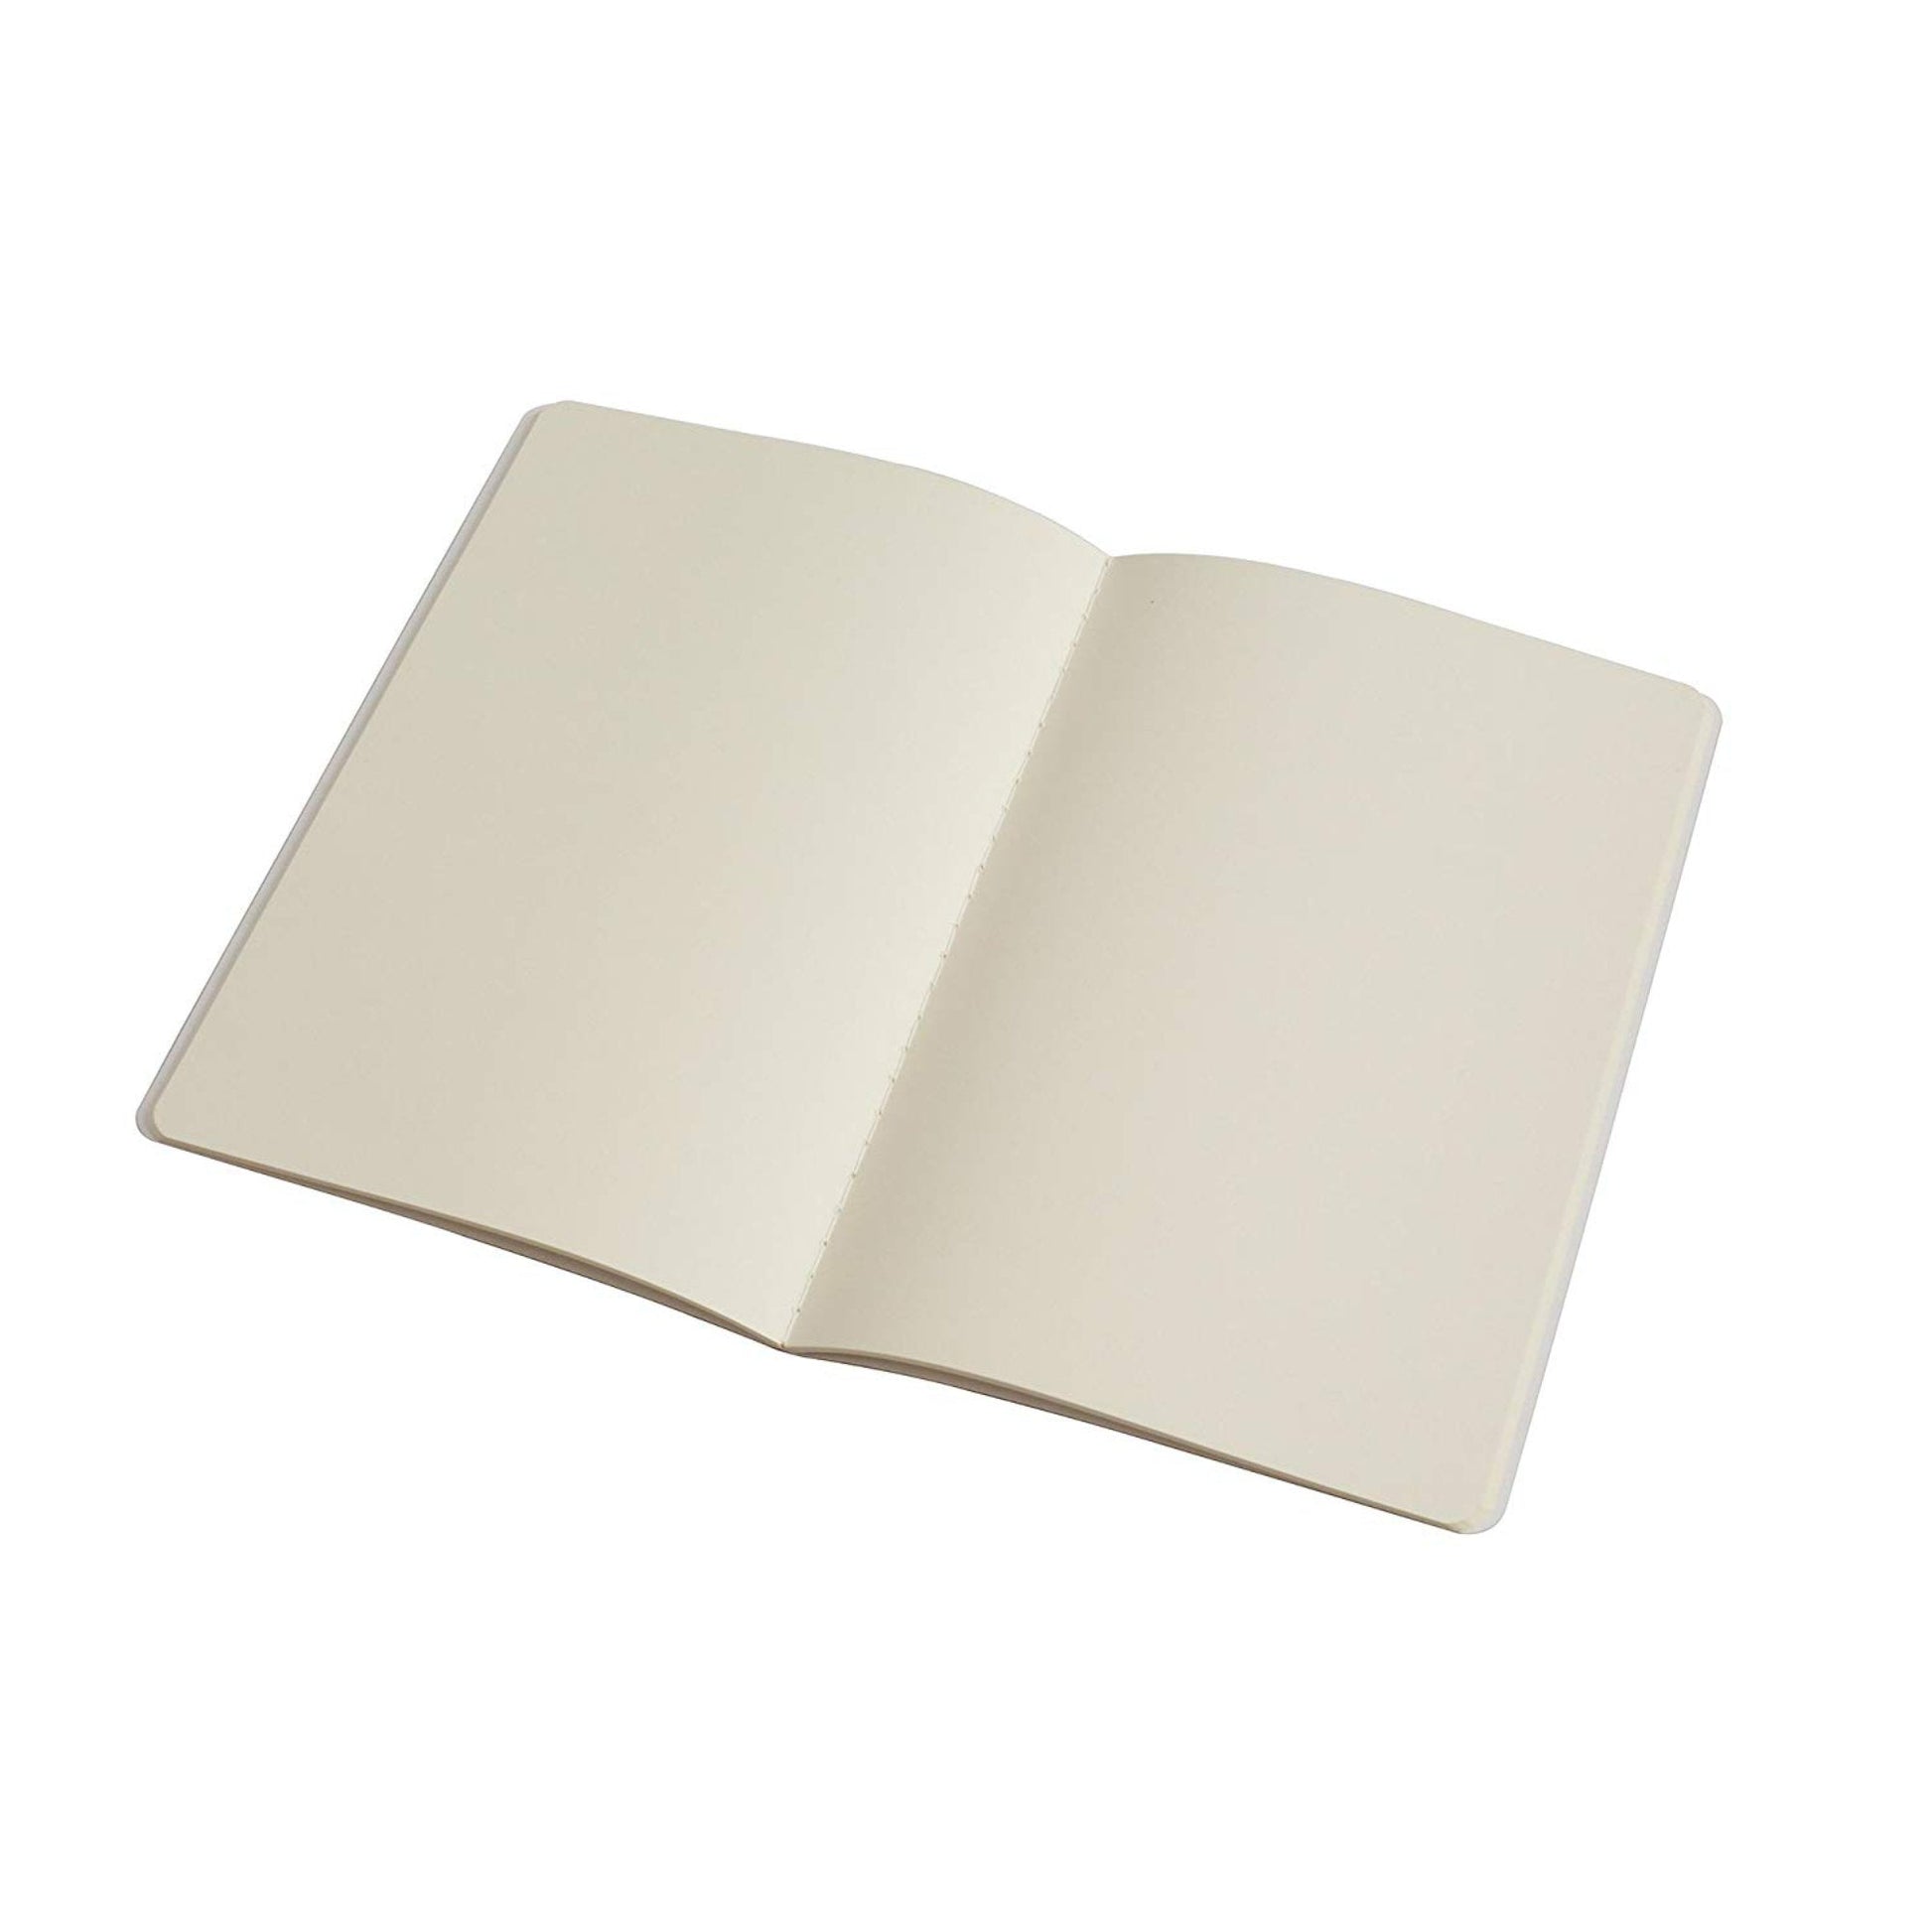 PinkPolish Design Notebook "Sunny Bun Bun" Notebook / Sketchbook / Journal